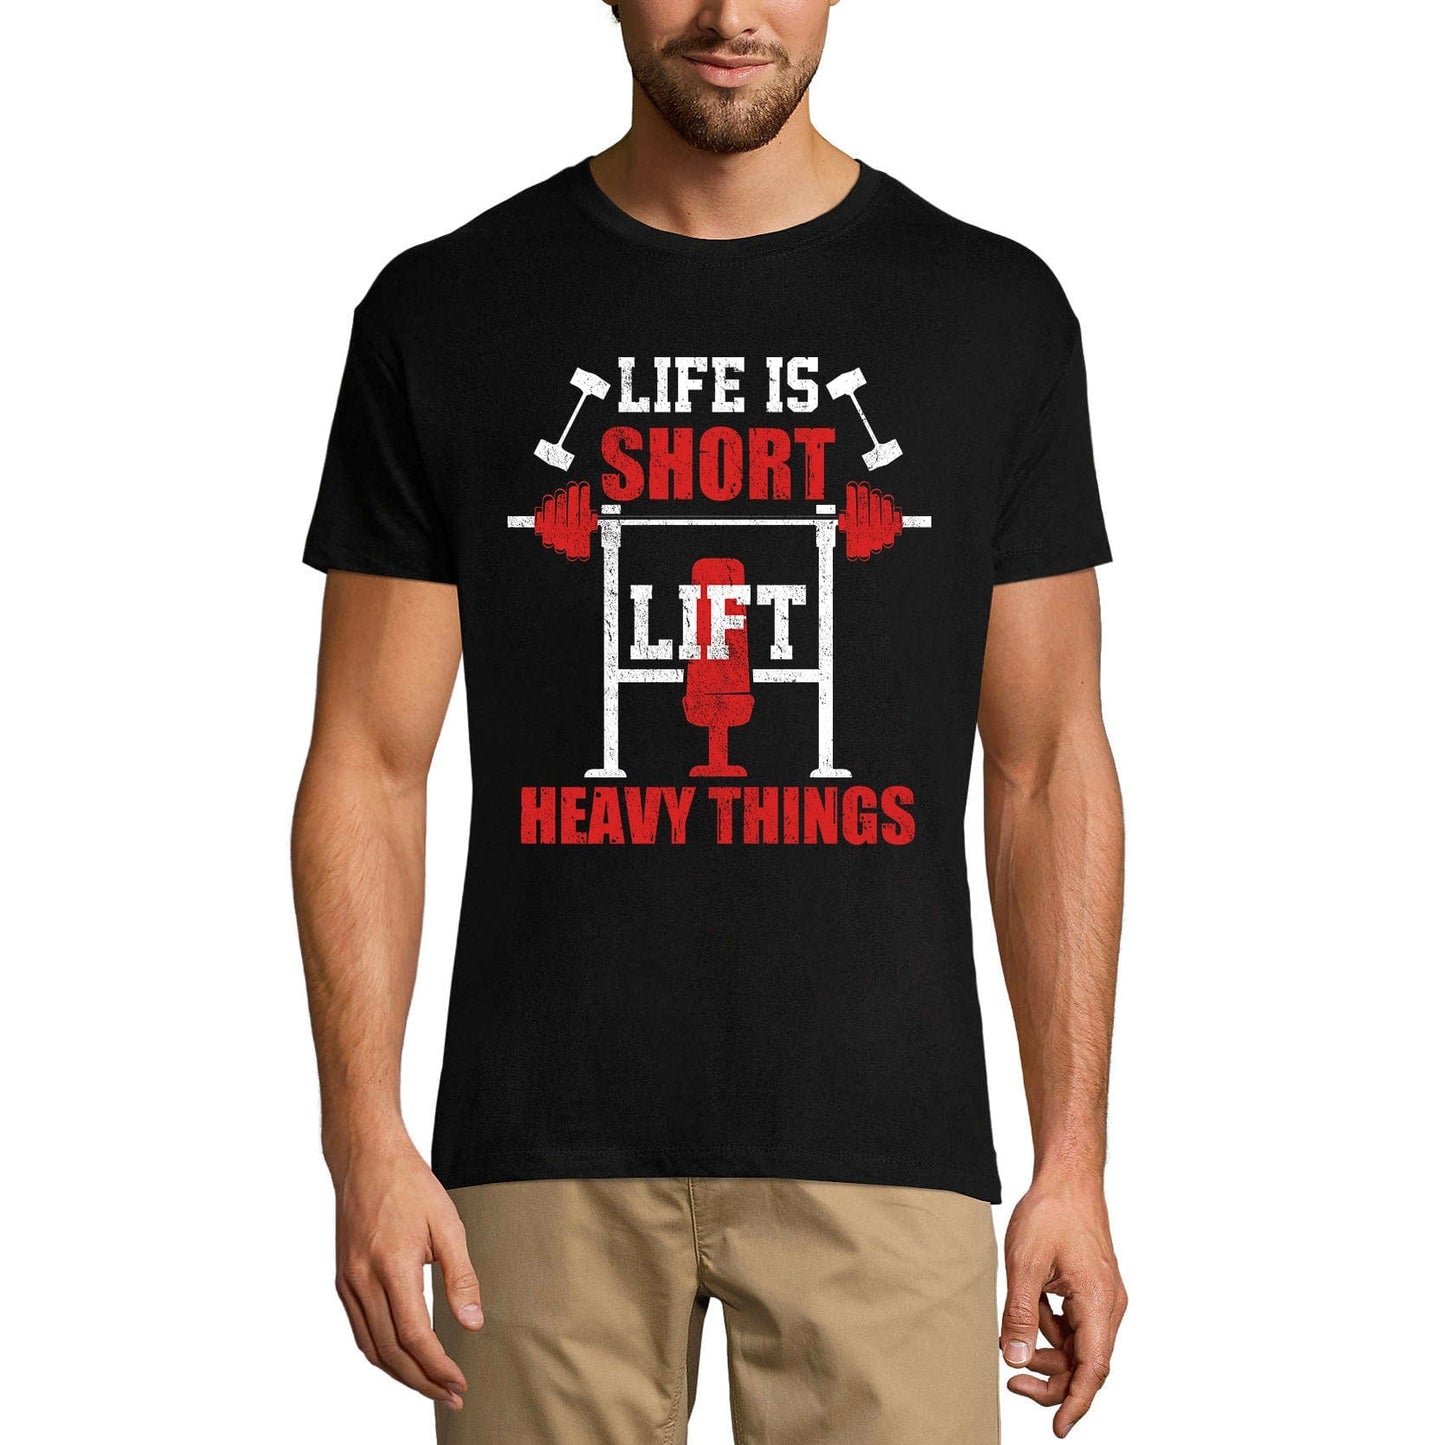 ULTRABASIC Men's Gym T-Shirt Life is Short Lift Heavy Things - Motivational Funny Shirt